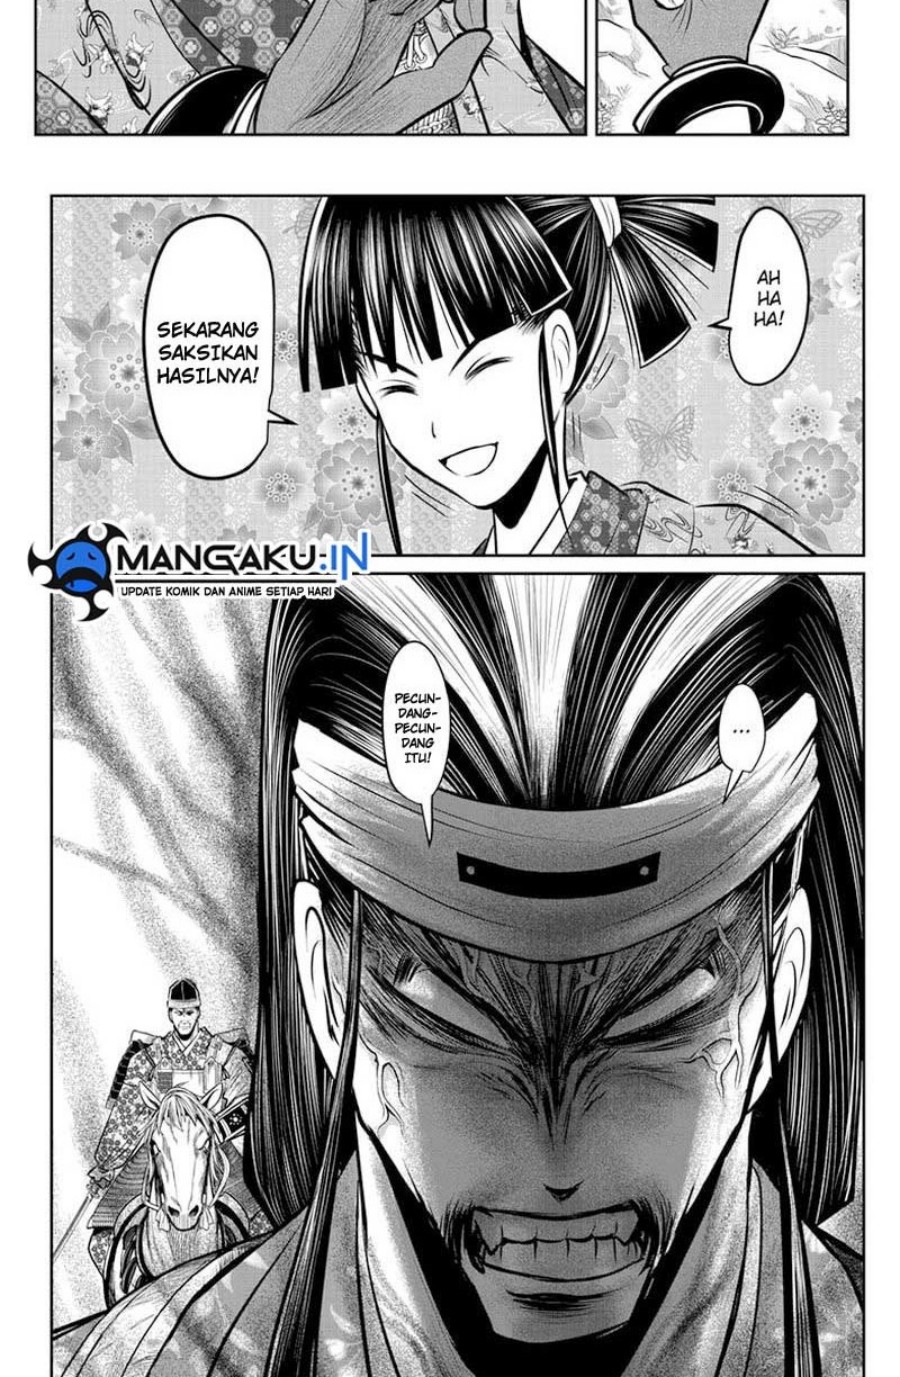 The Elusive Samurai Chapter 76